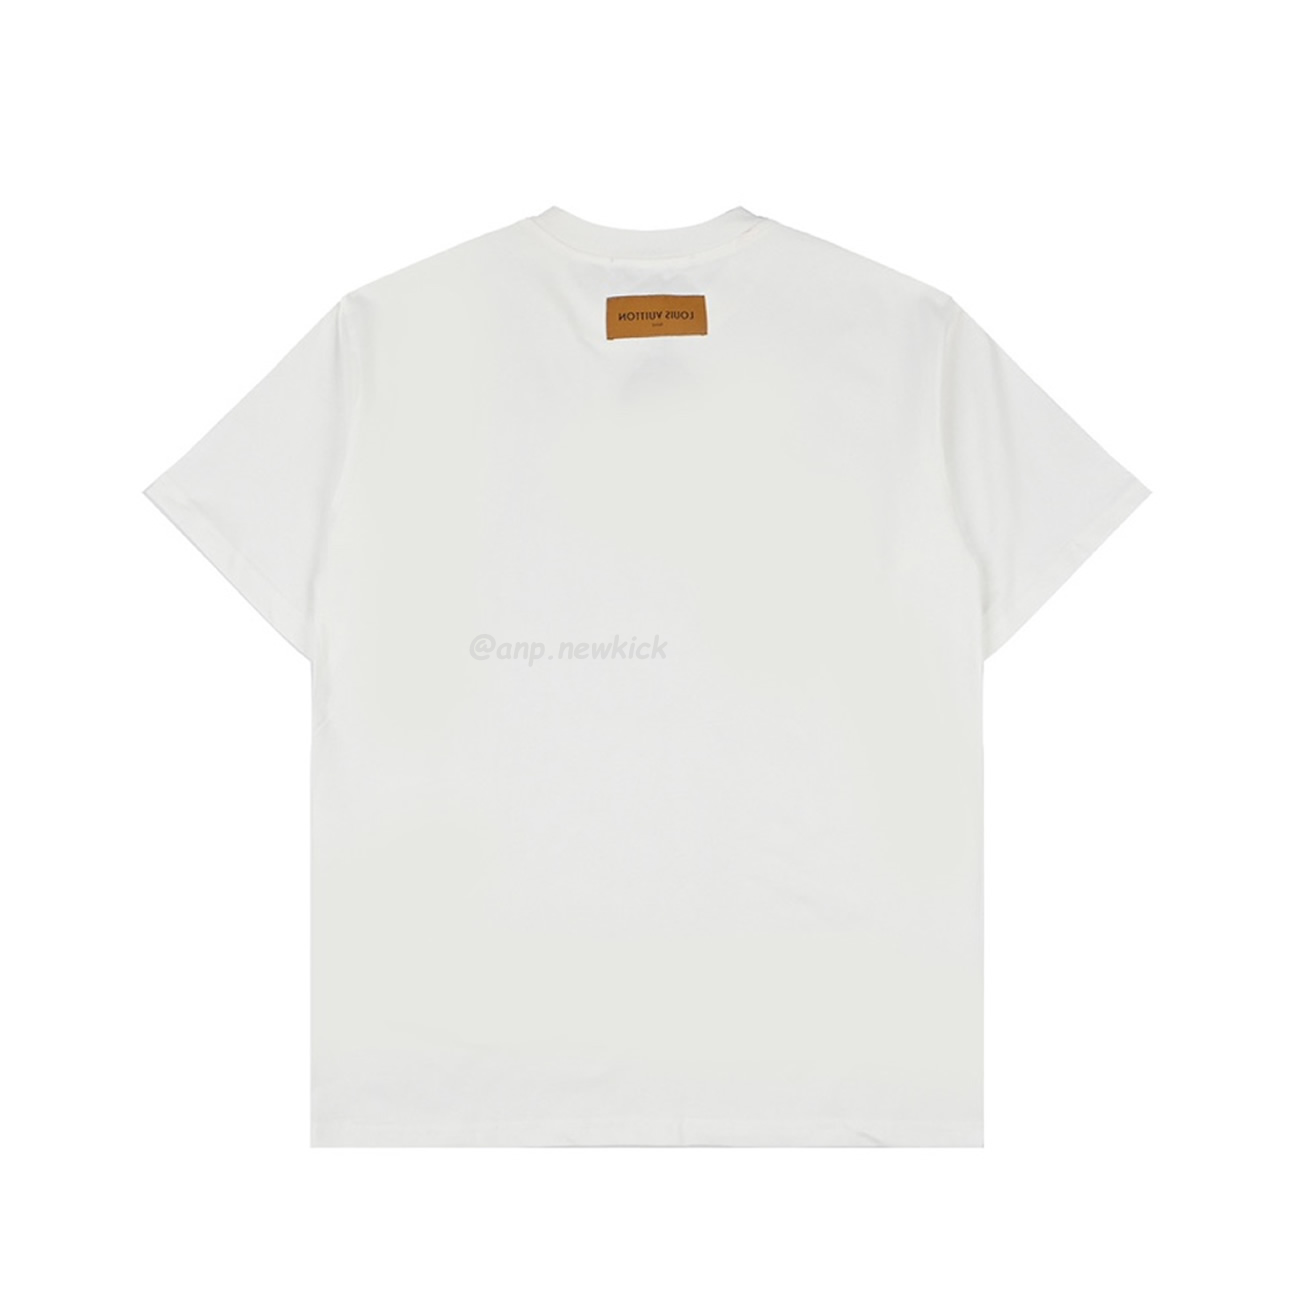 Louis Vuitton Geometric Curve Neon Printed Short Sleeved T Shirt (10) - newkick.org